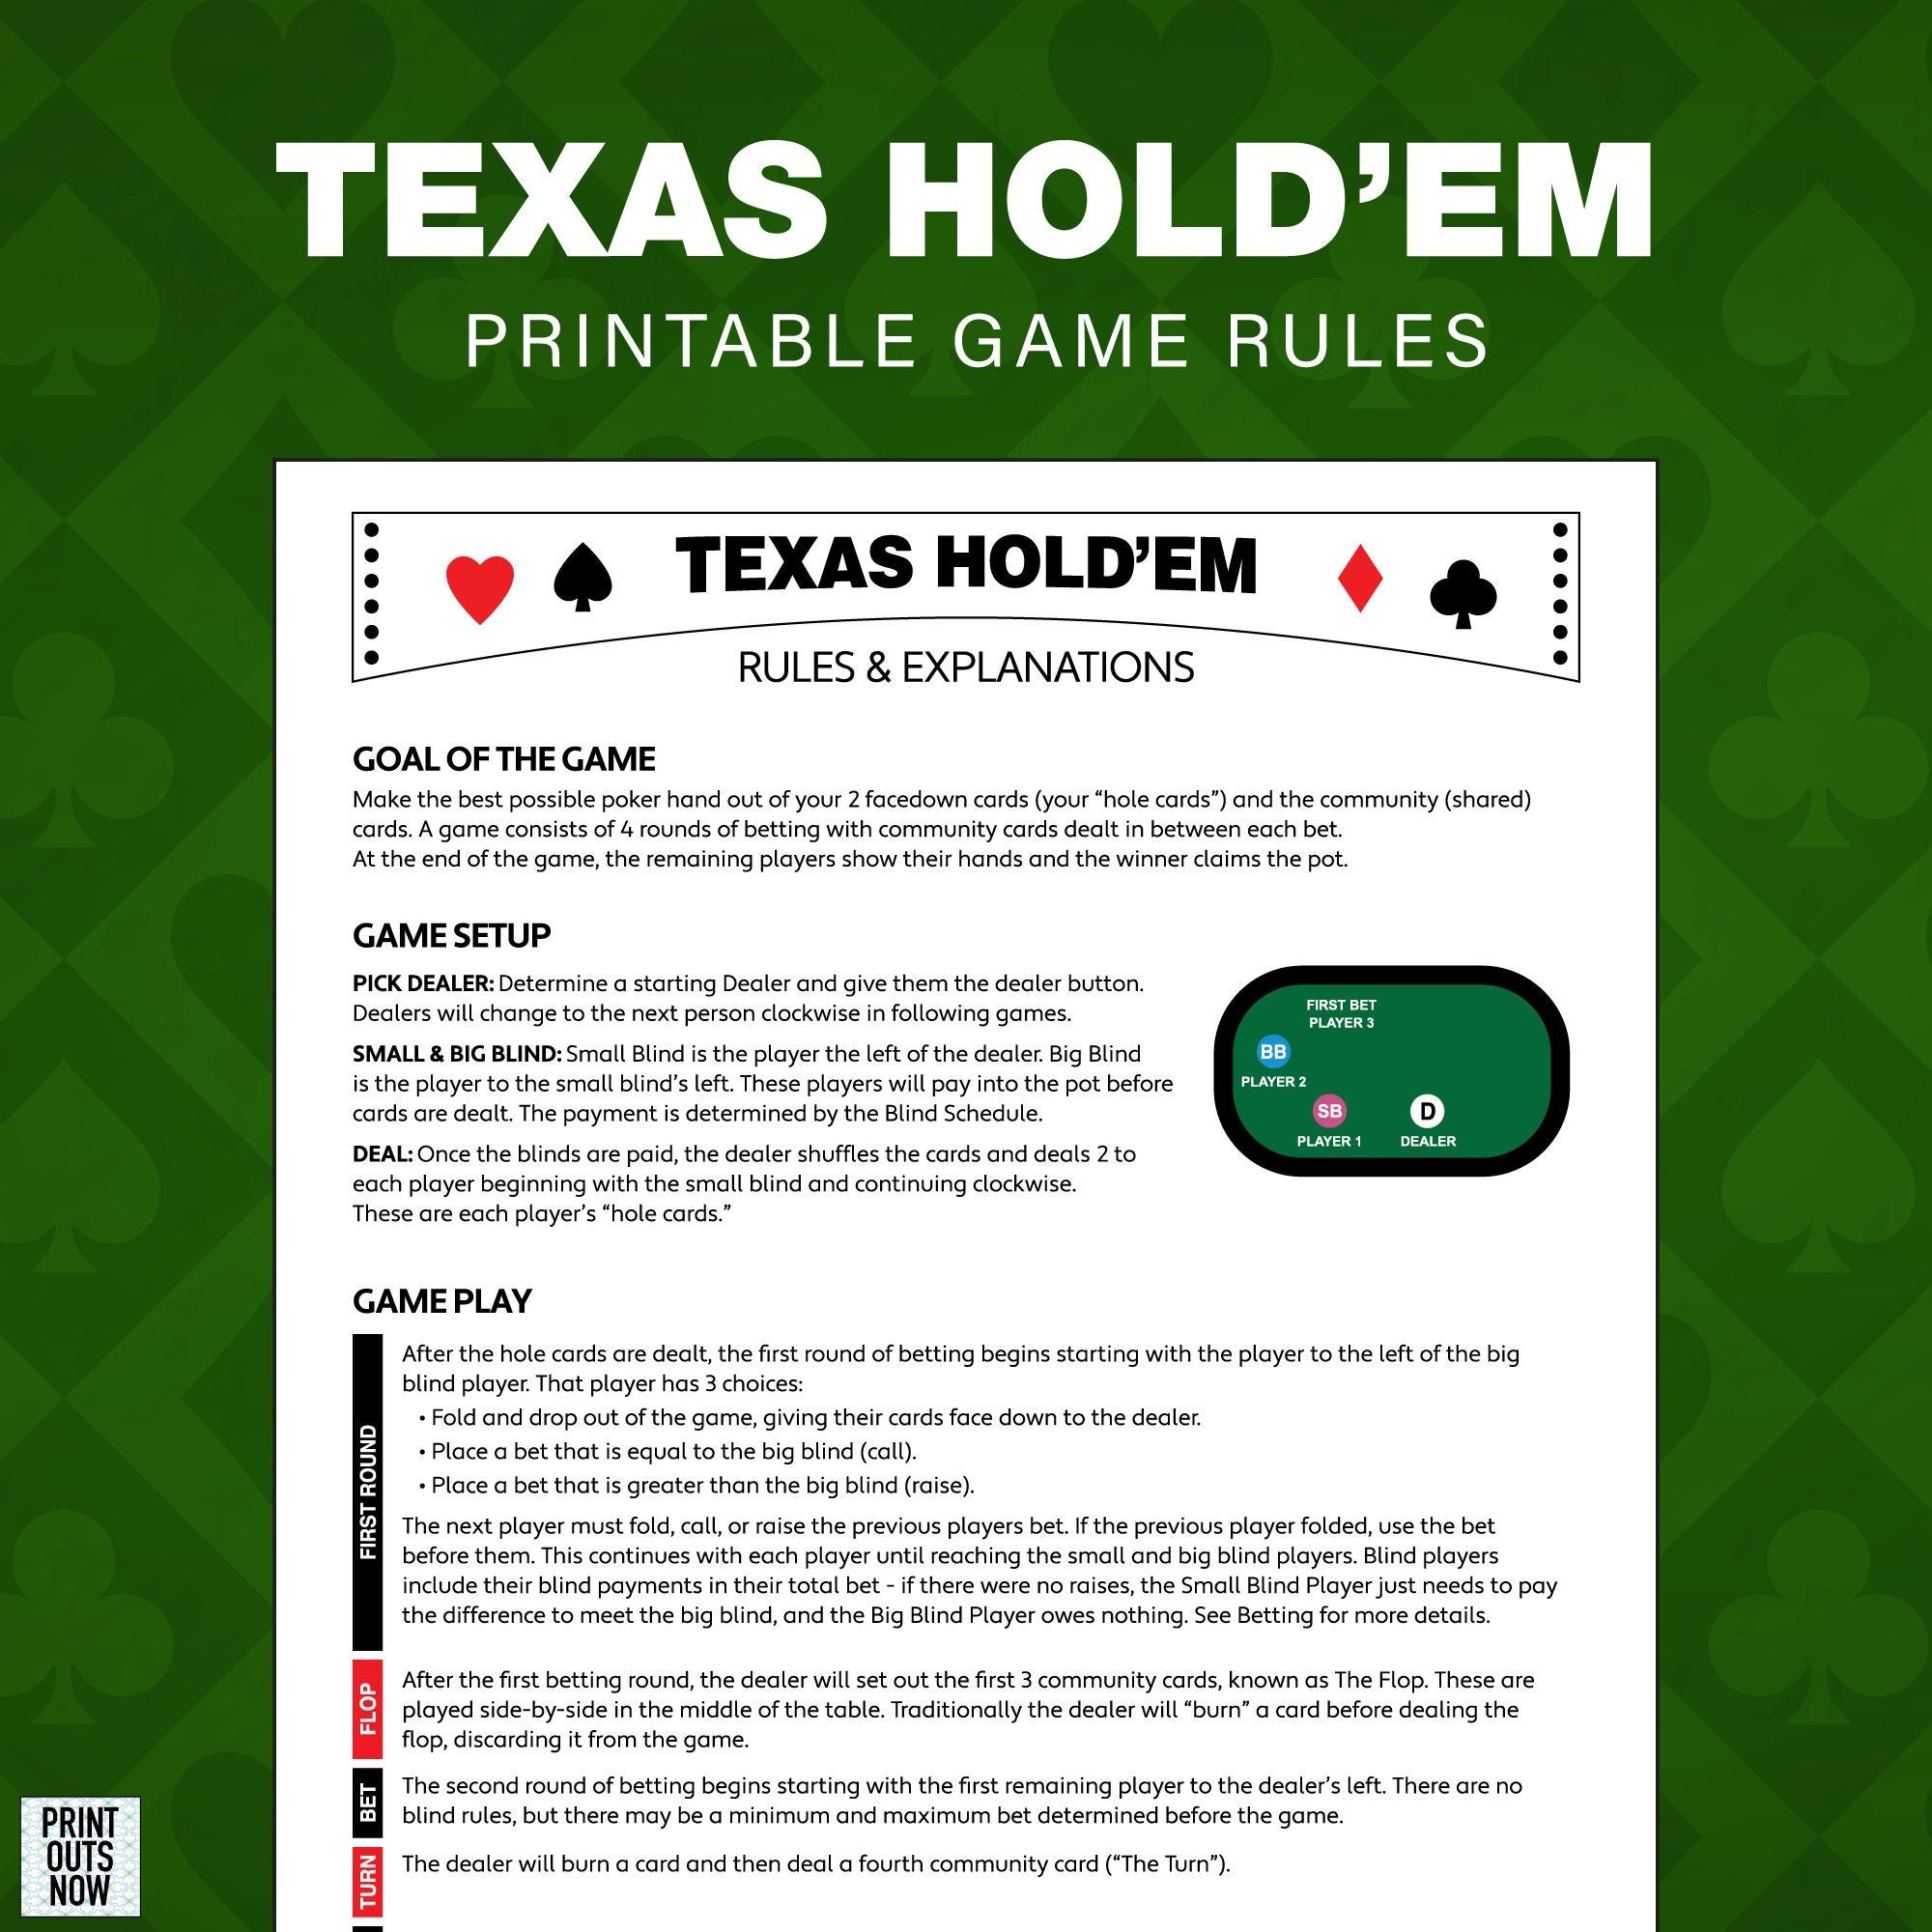 Split Pots in Texas Hold'em